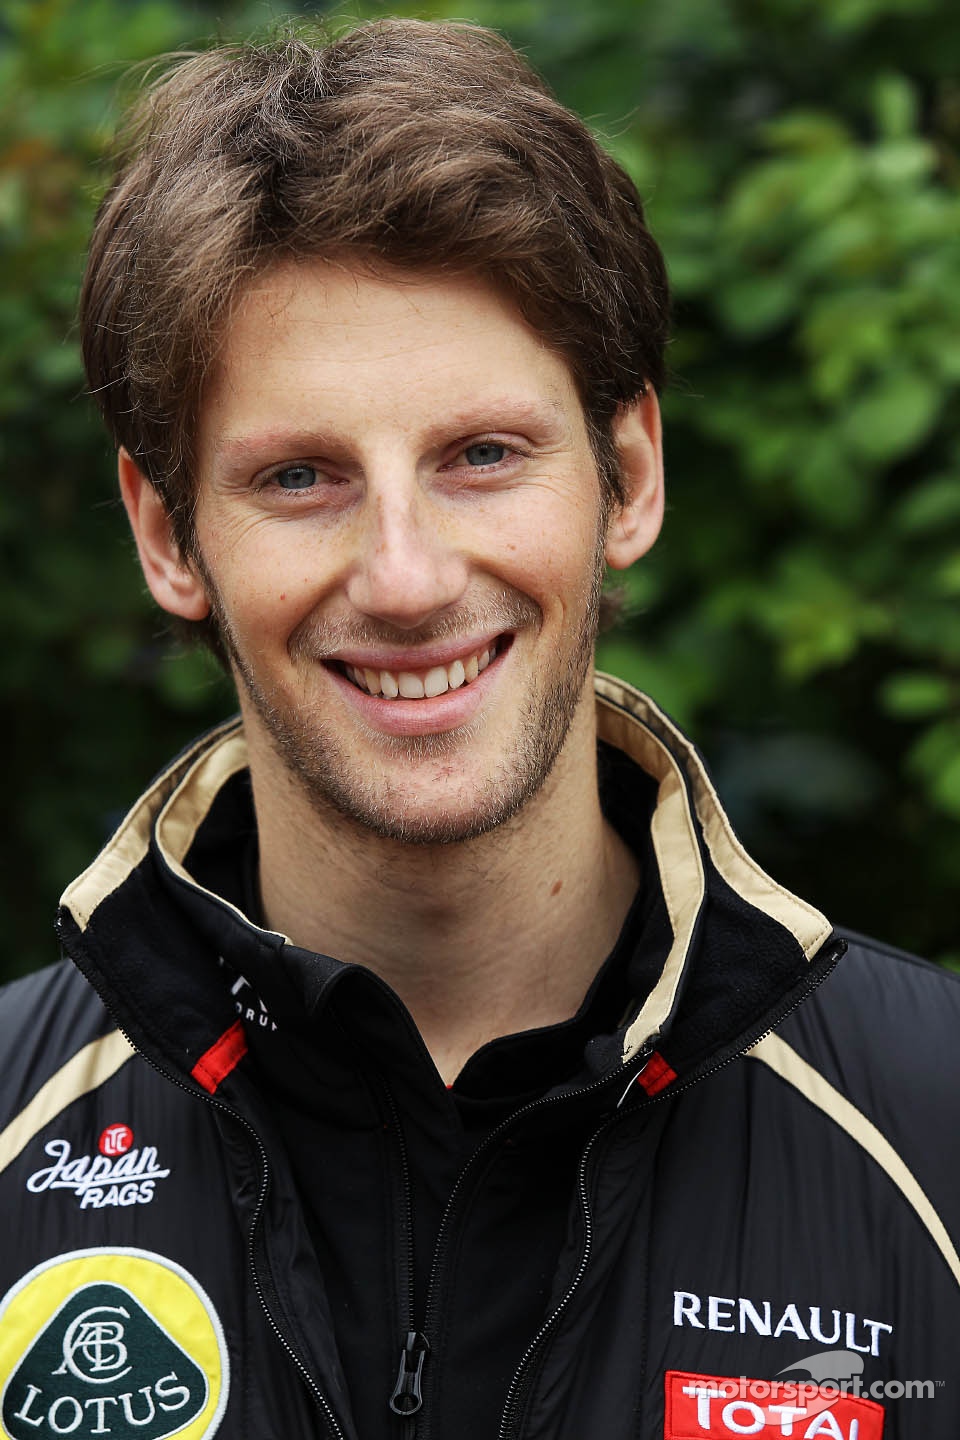 Lotus Driver <b>Romain Grosjean</b> of France, 26. - grosjean14